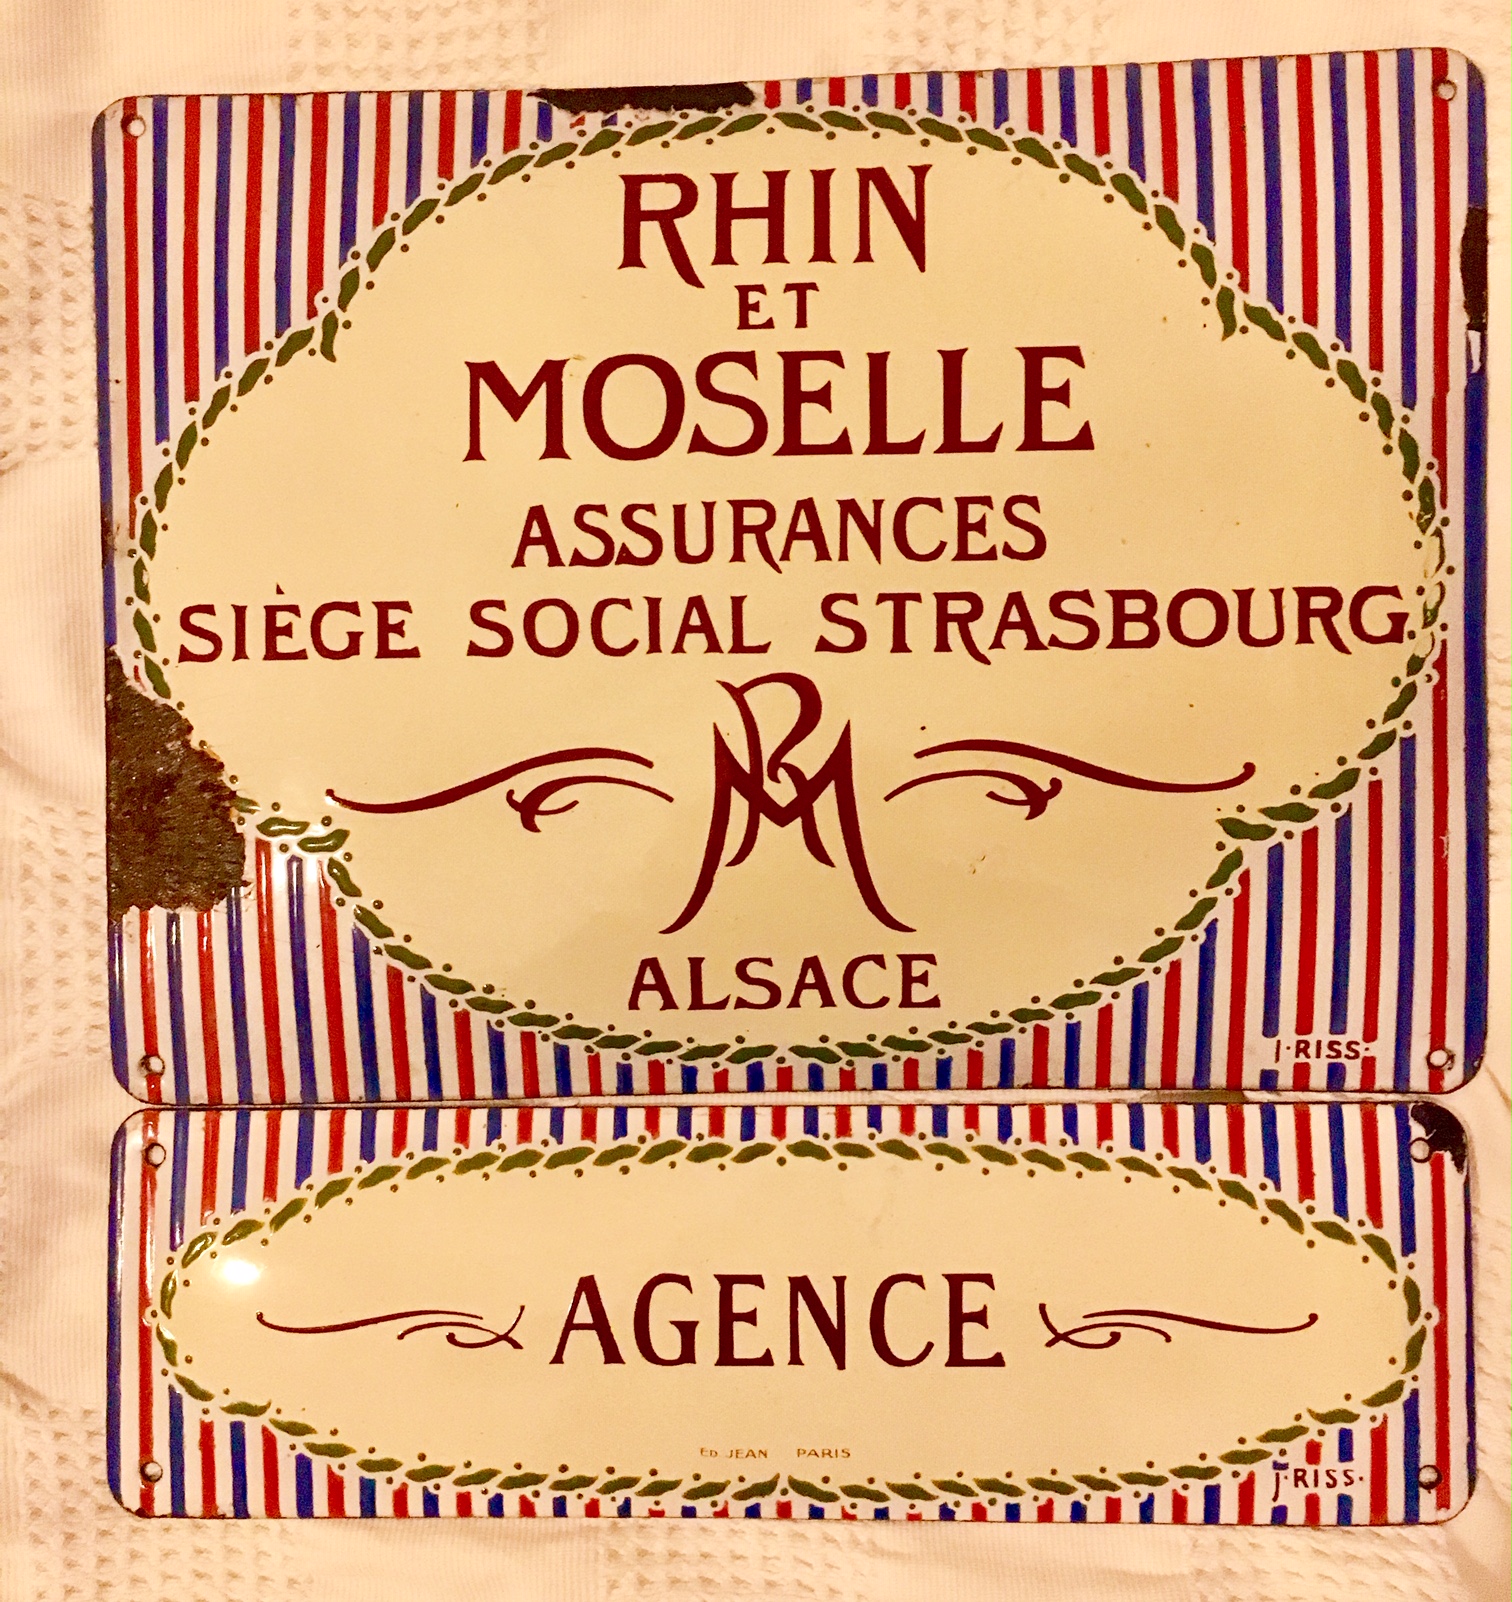 Rhin Moselle